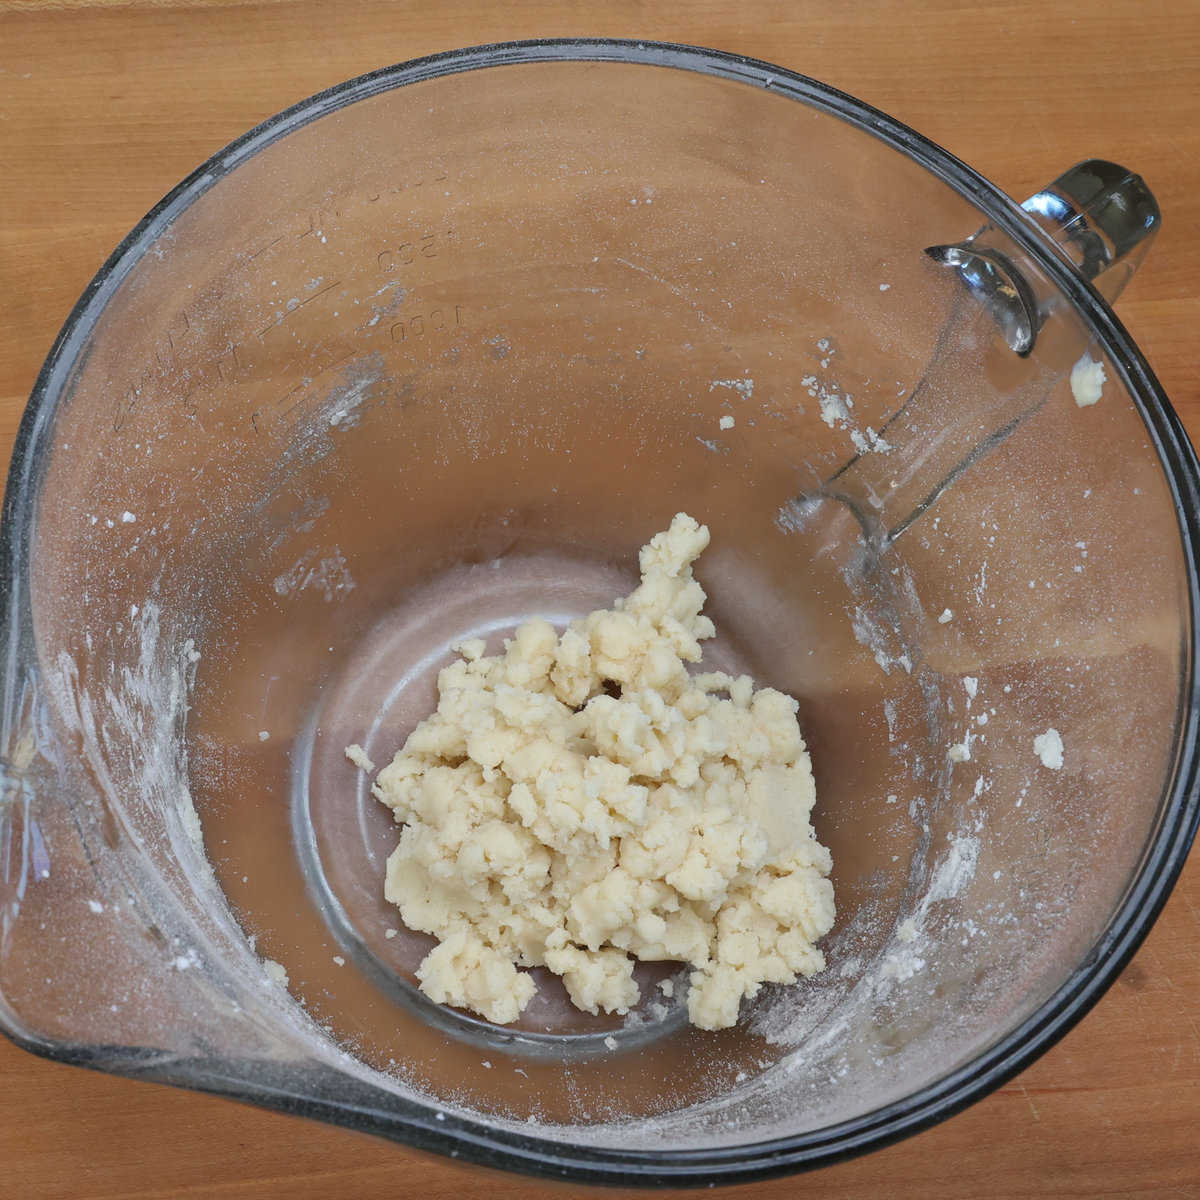 shortbread crust dough in a mixing bowl.